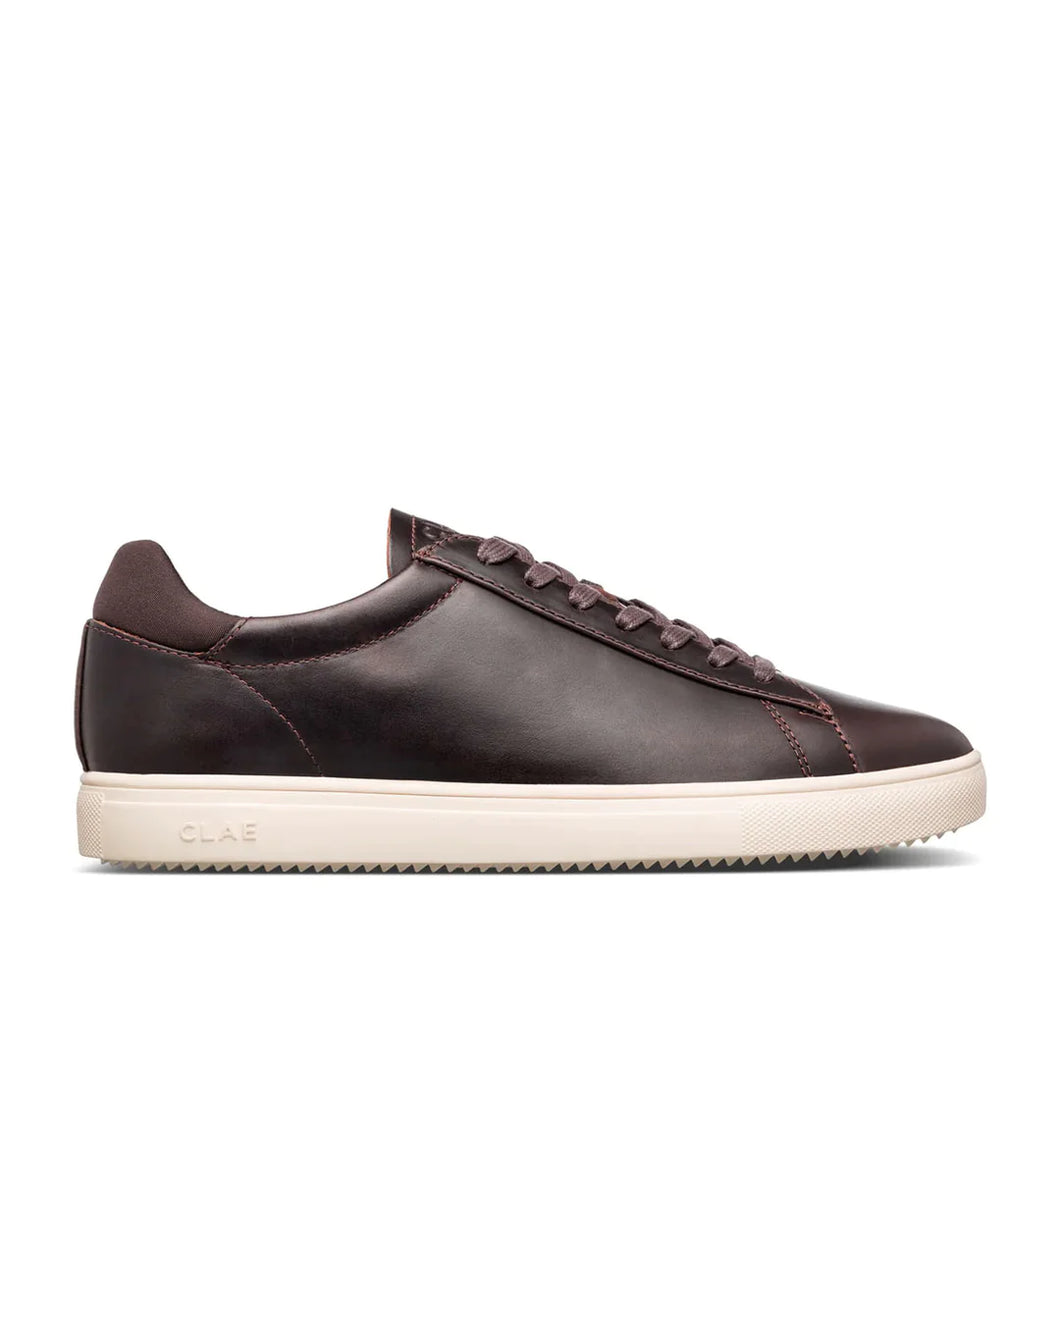 Clae Deane Walrus Brown Leather Sneakers